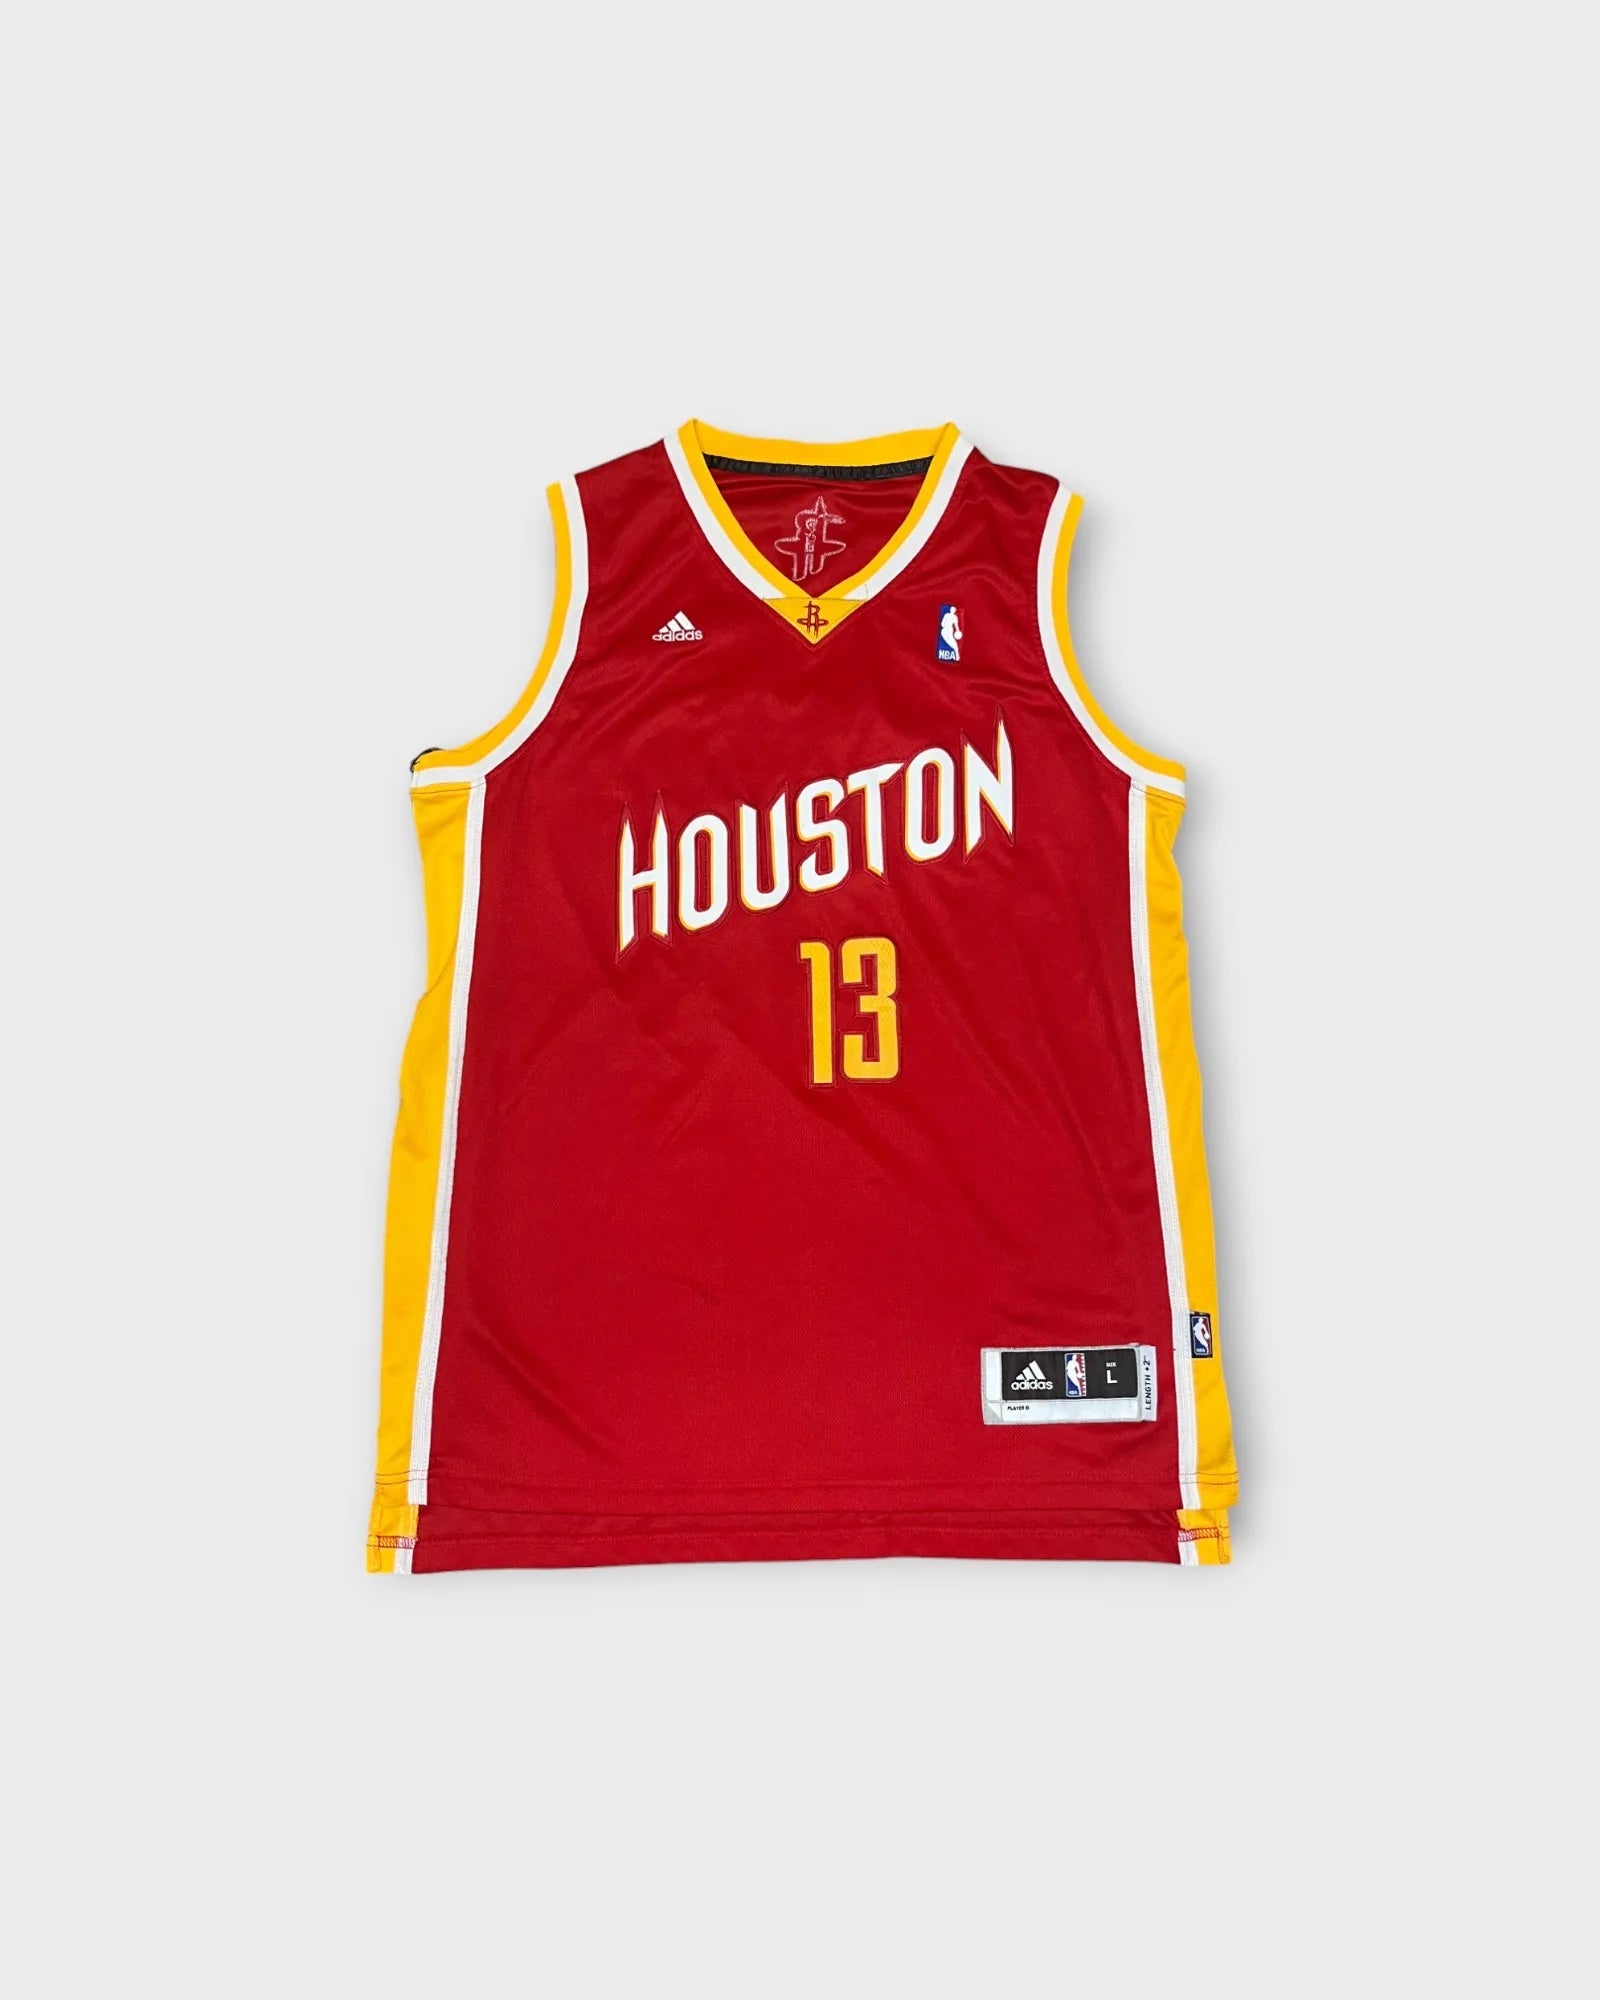 Vintage Adidas Houston Rockets Basketball Jersey - L